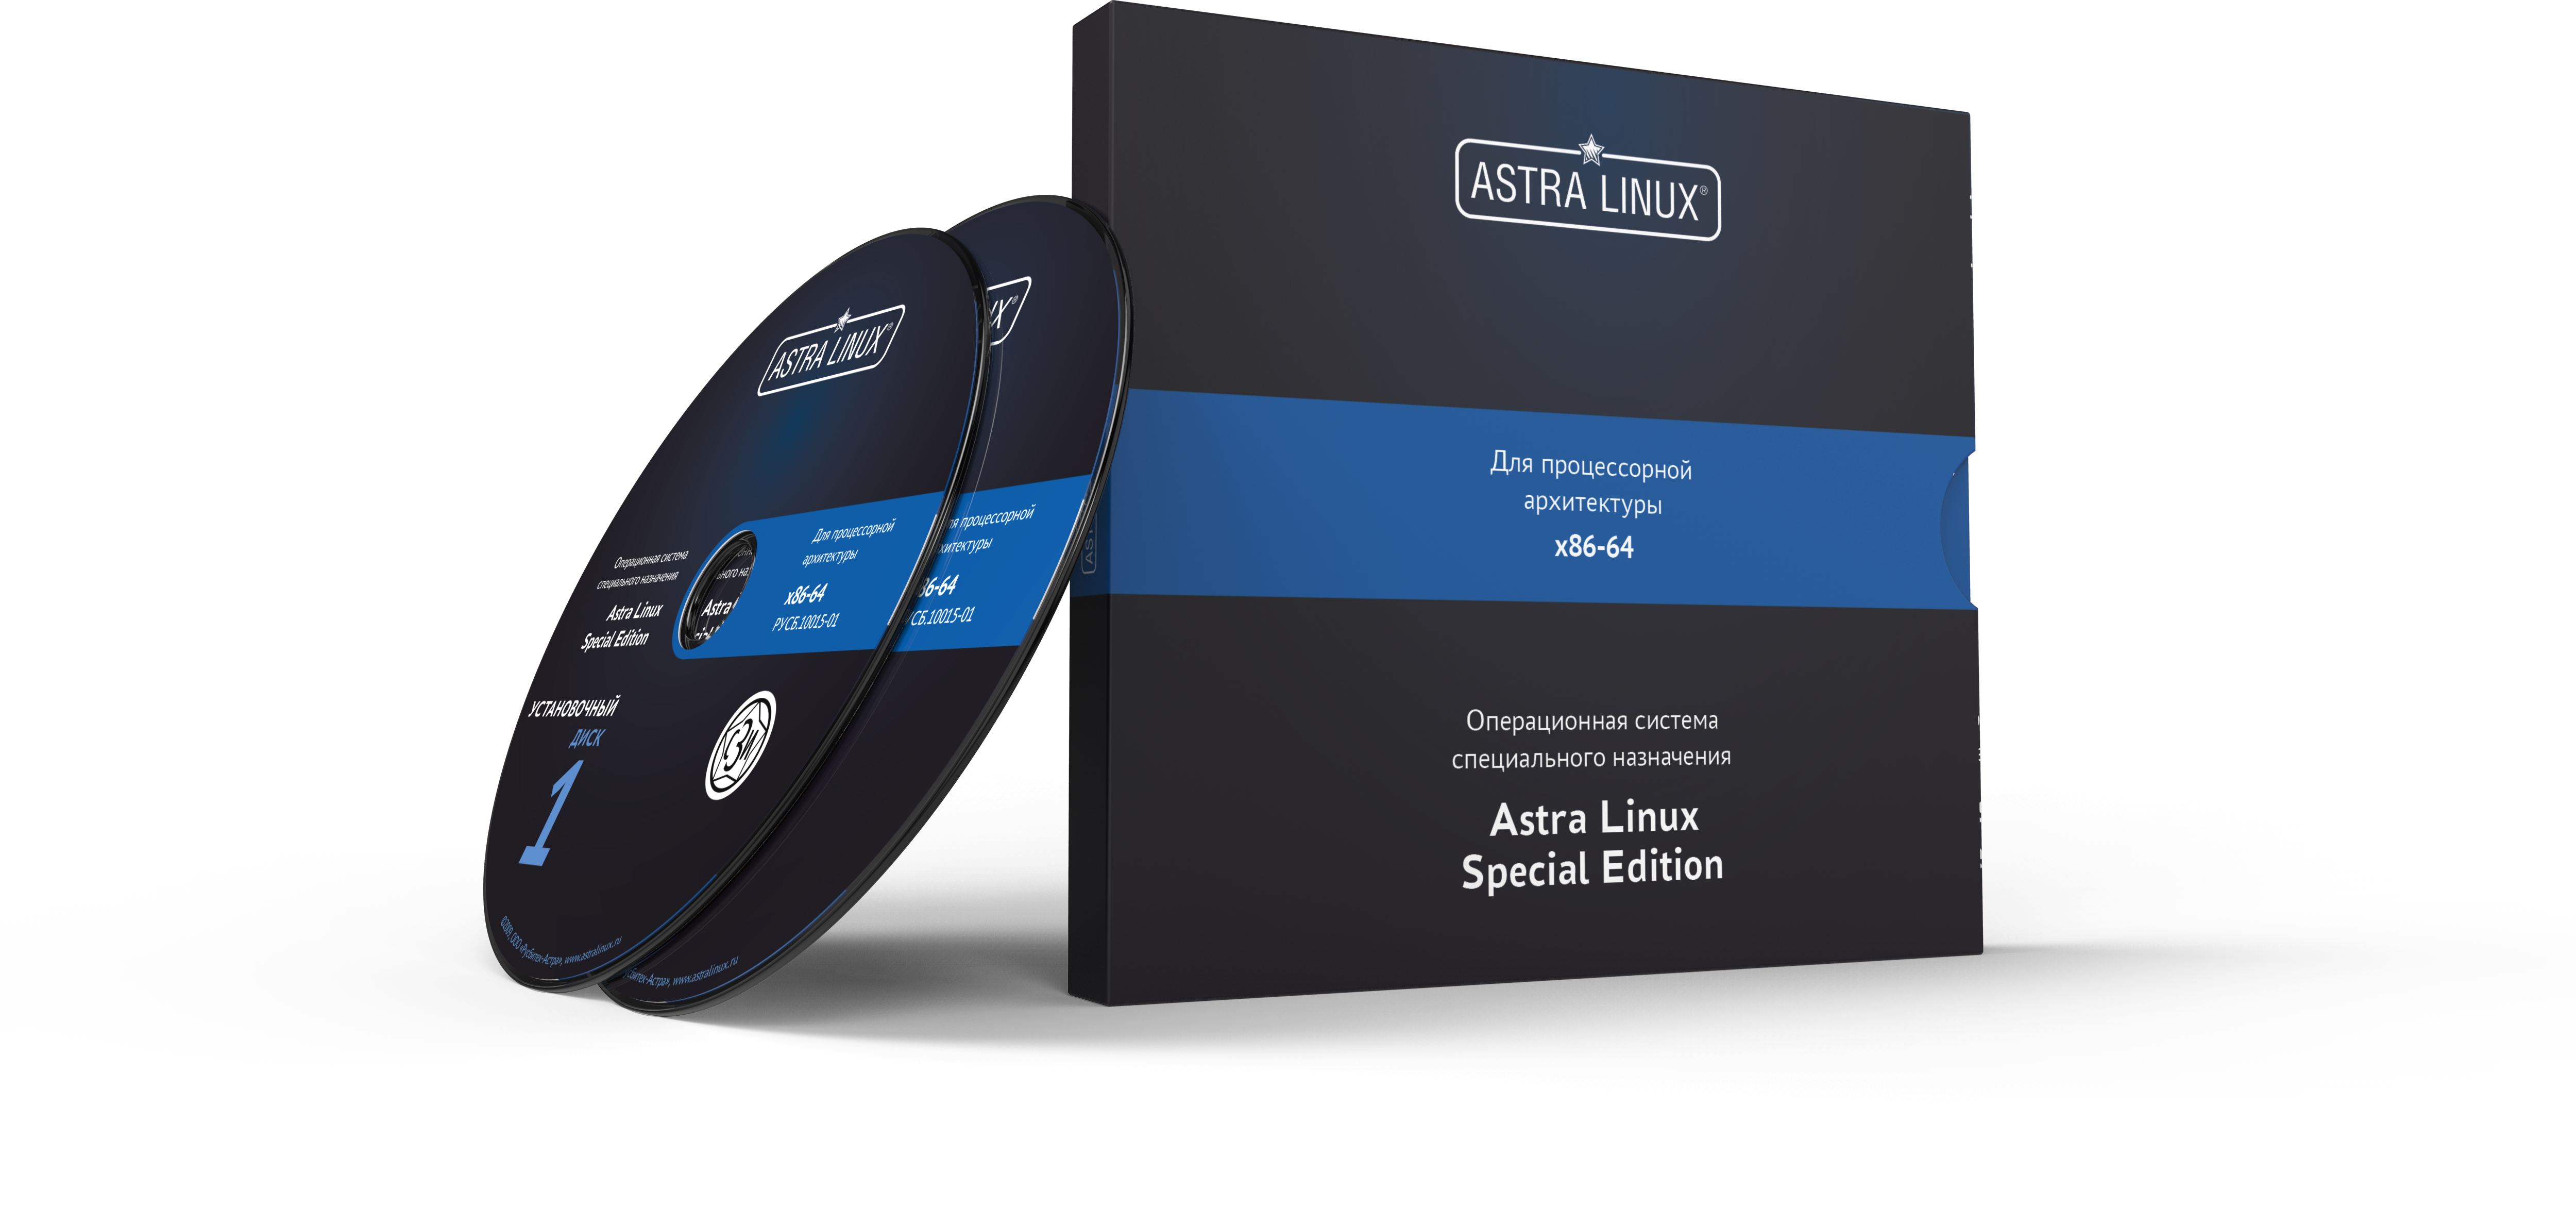 Astra Linux Special Edition 1.7 - Воронеж, "Усиленный", электронный, ФСТЭК, без огр. срока, ТП "Стандарт" на 36 мес.